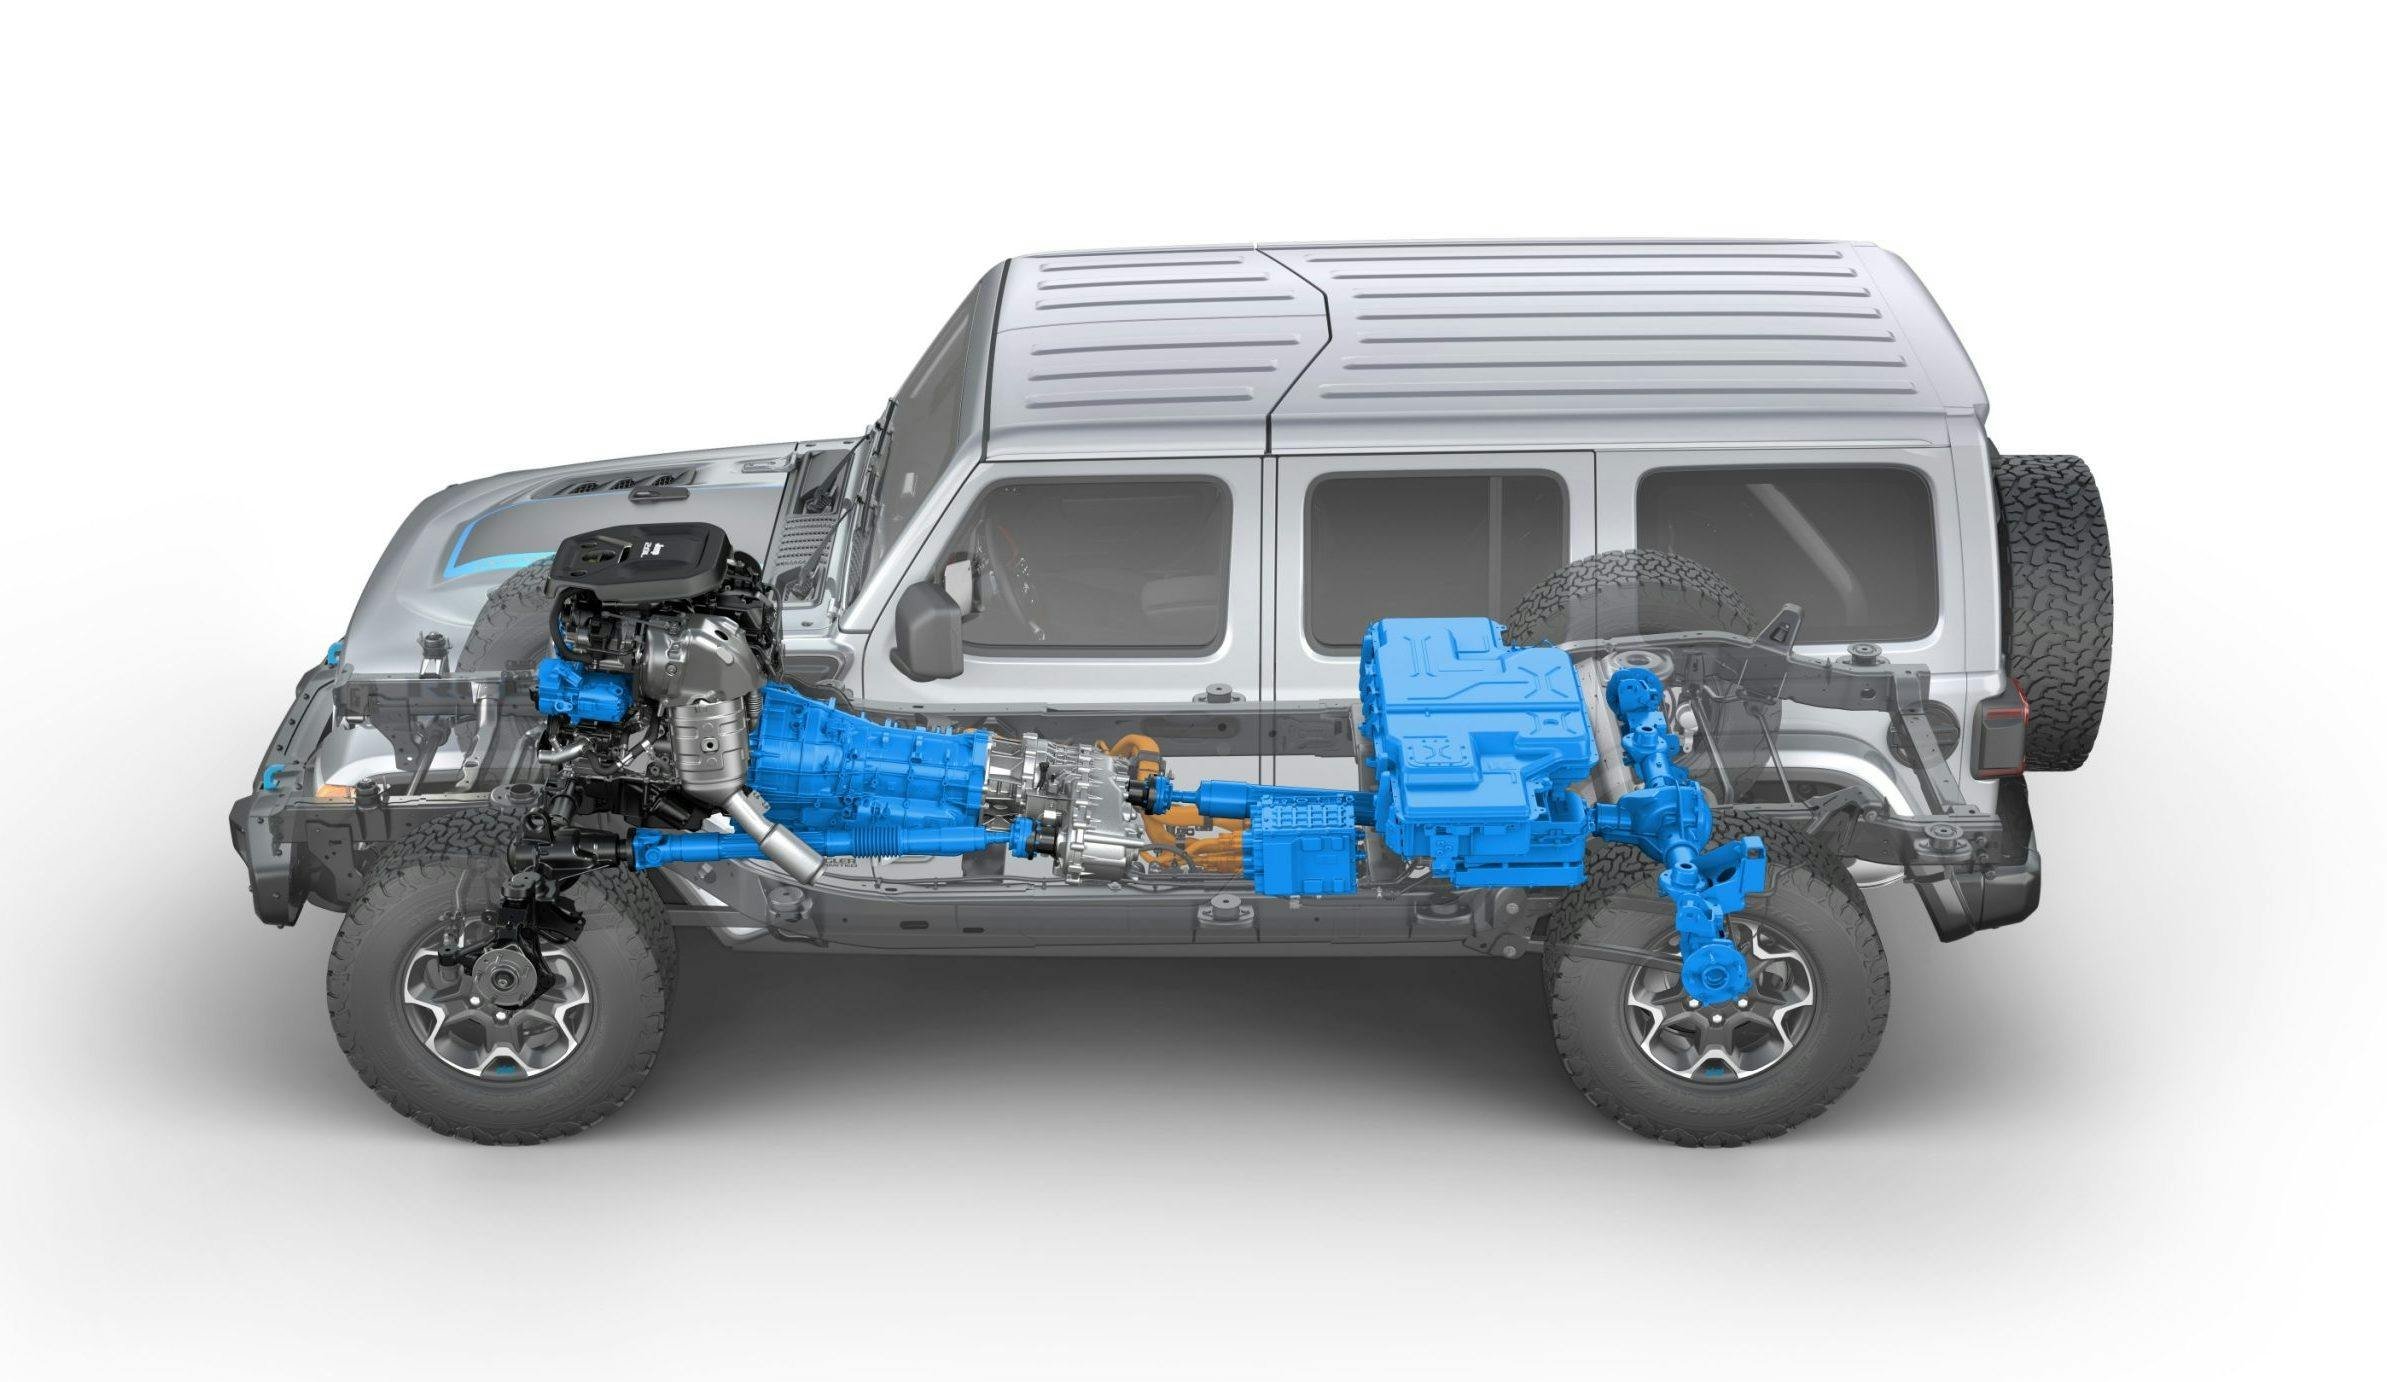 375-hp 4xe hybrid powertrain debuts in 2021 Wrangler - Hagerty Media